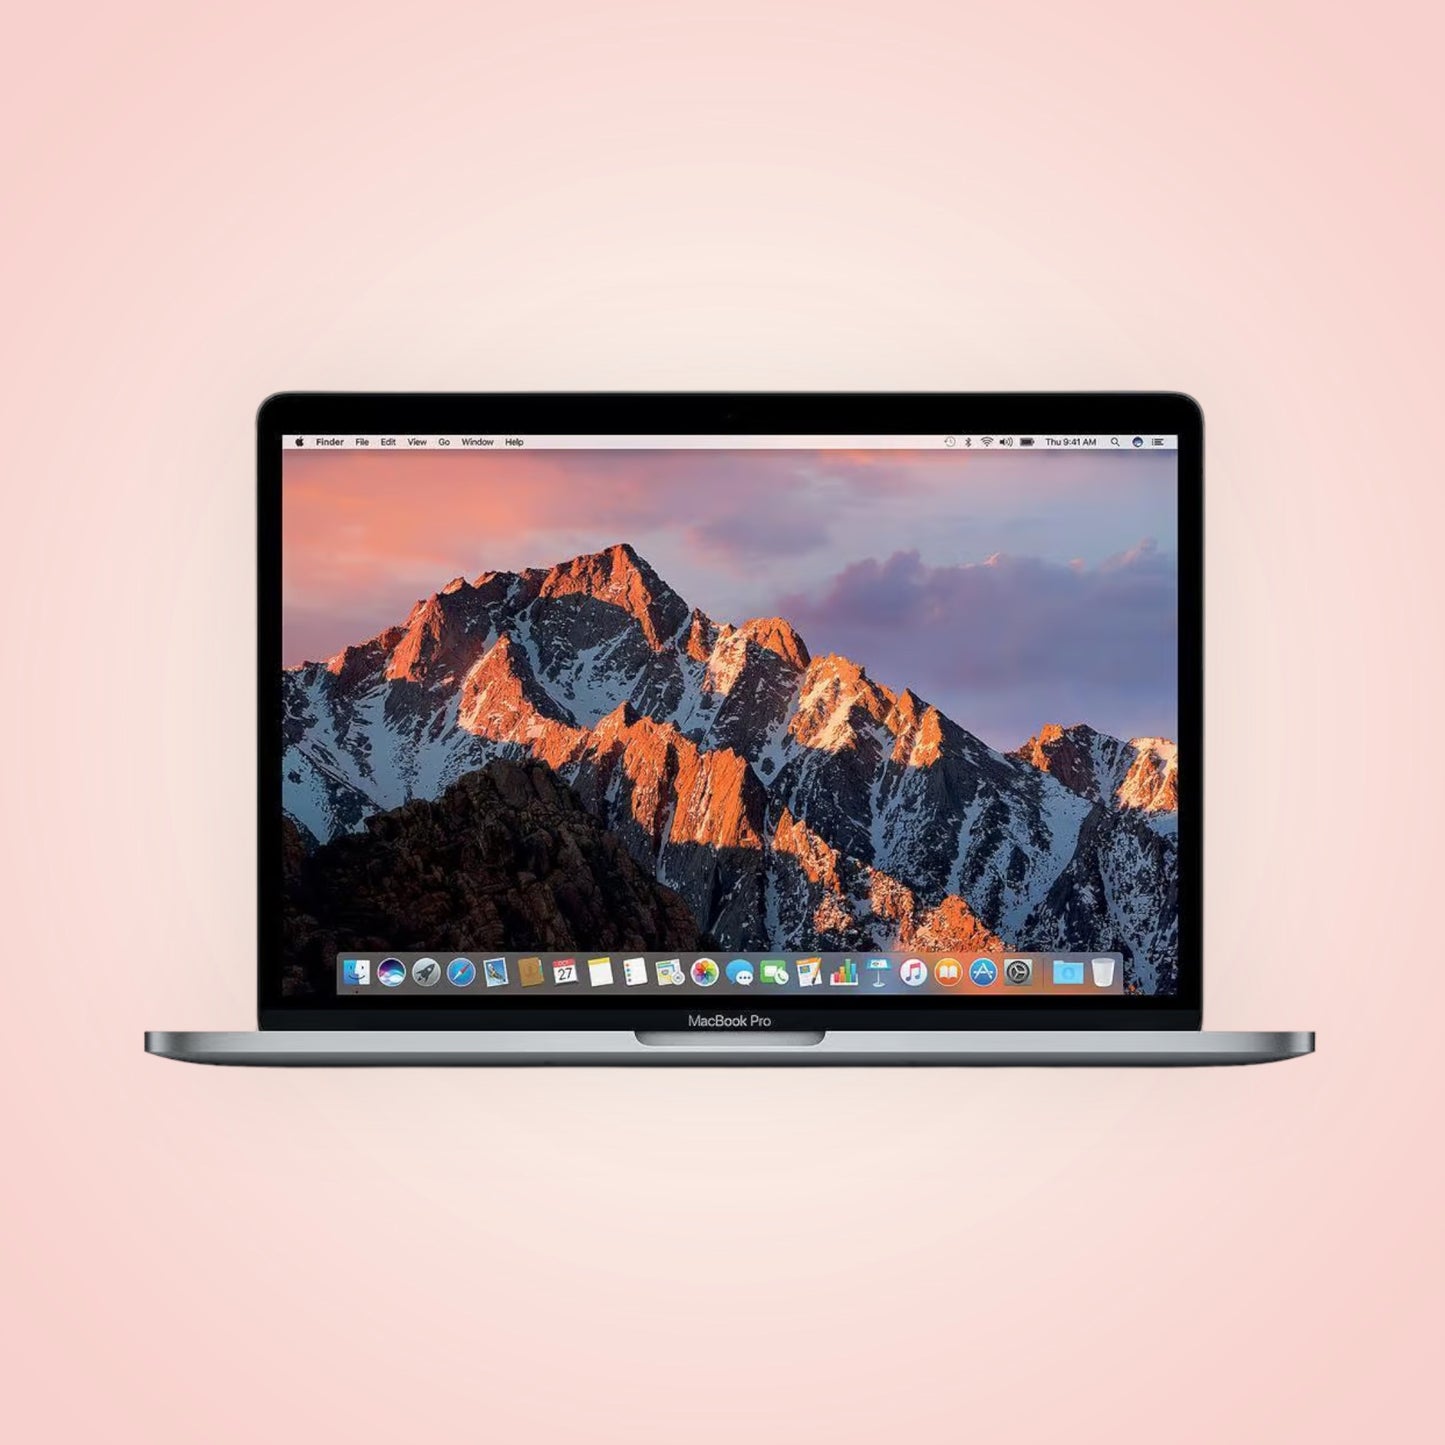 MacBook Pro (Retina, 13-inch, Early 2015) - 128GB SSD